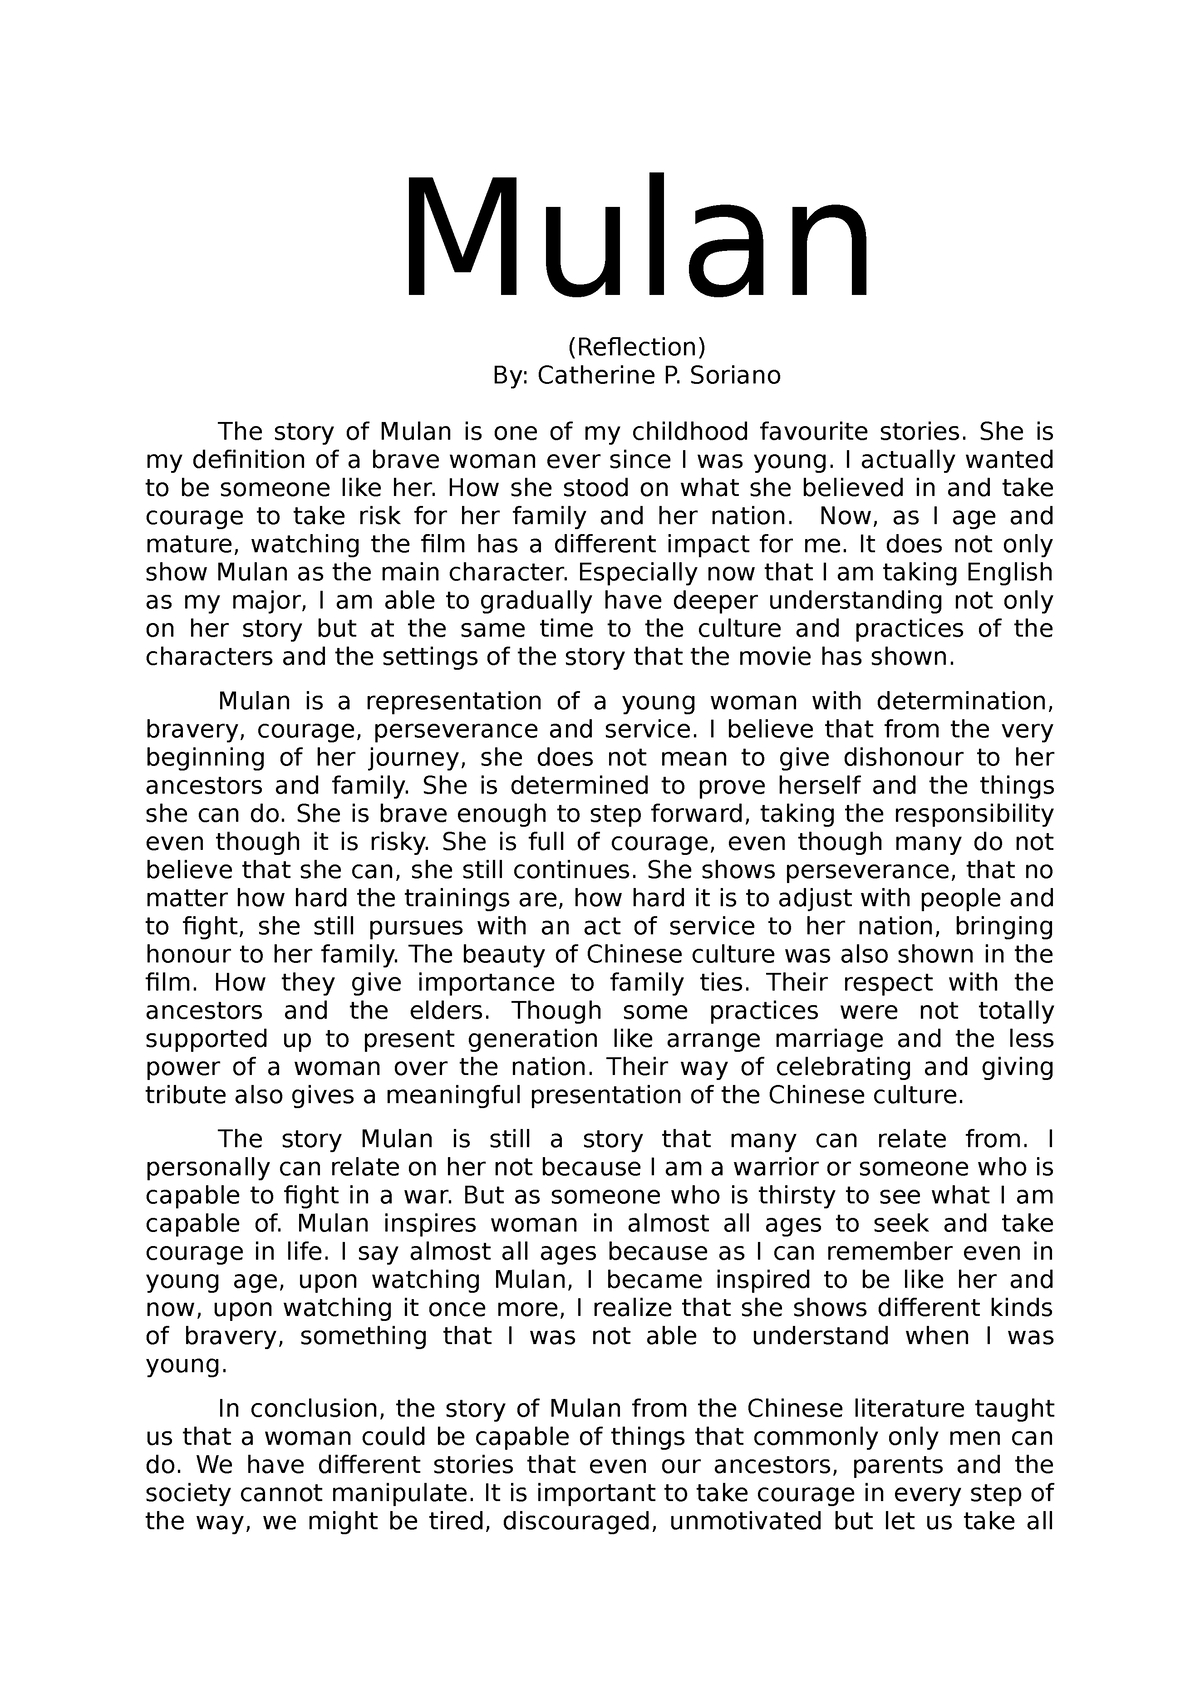 mulan summary essay 2020